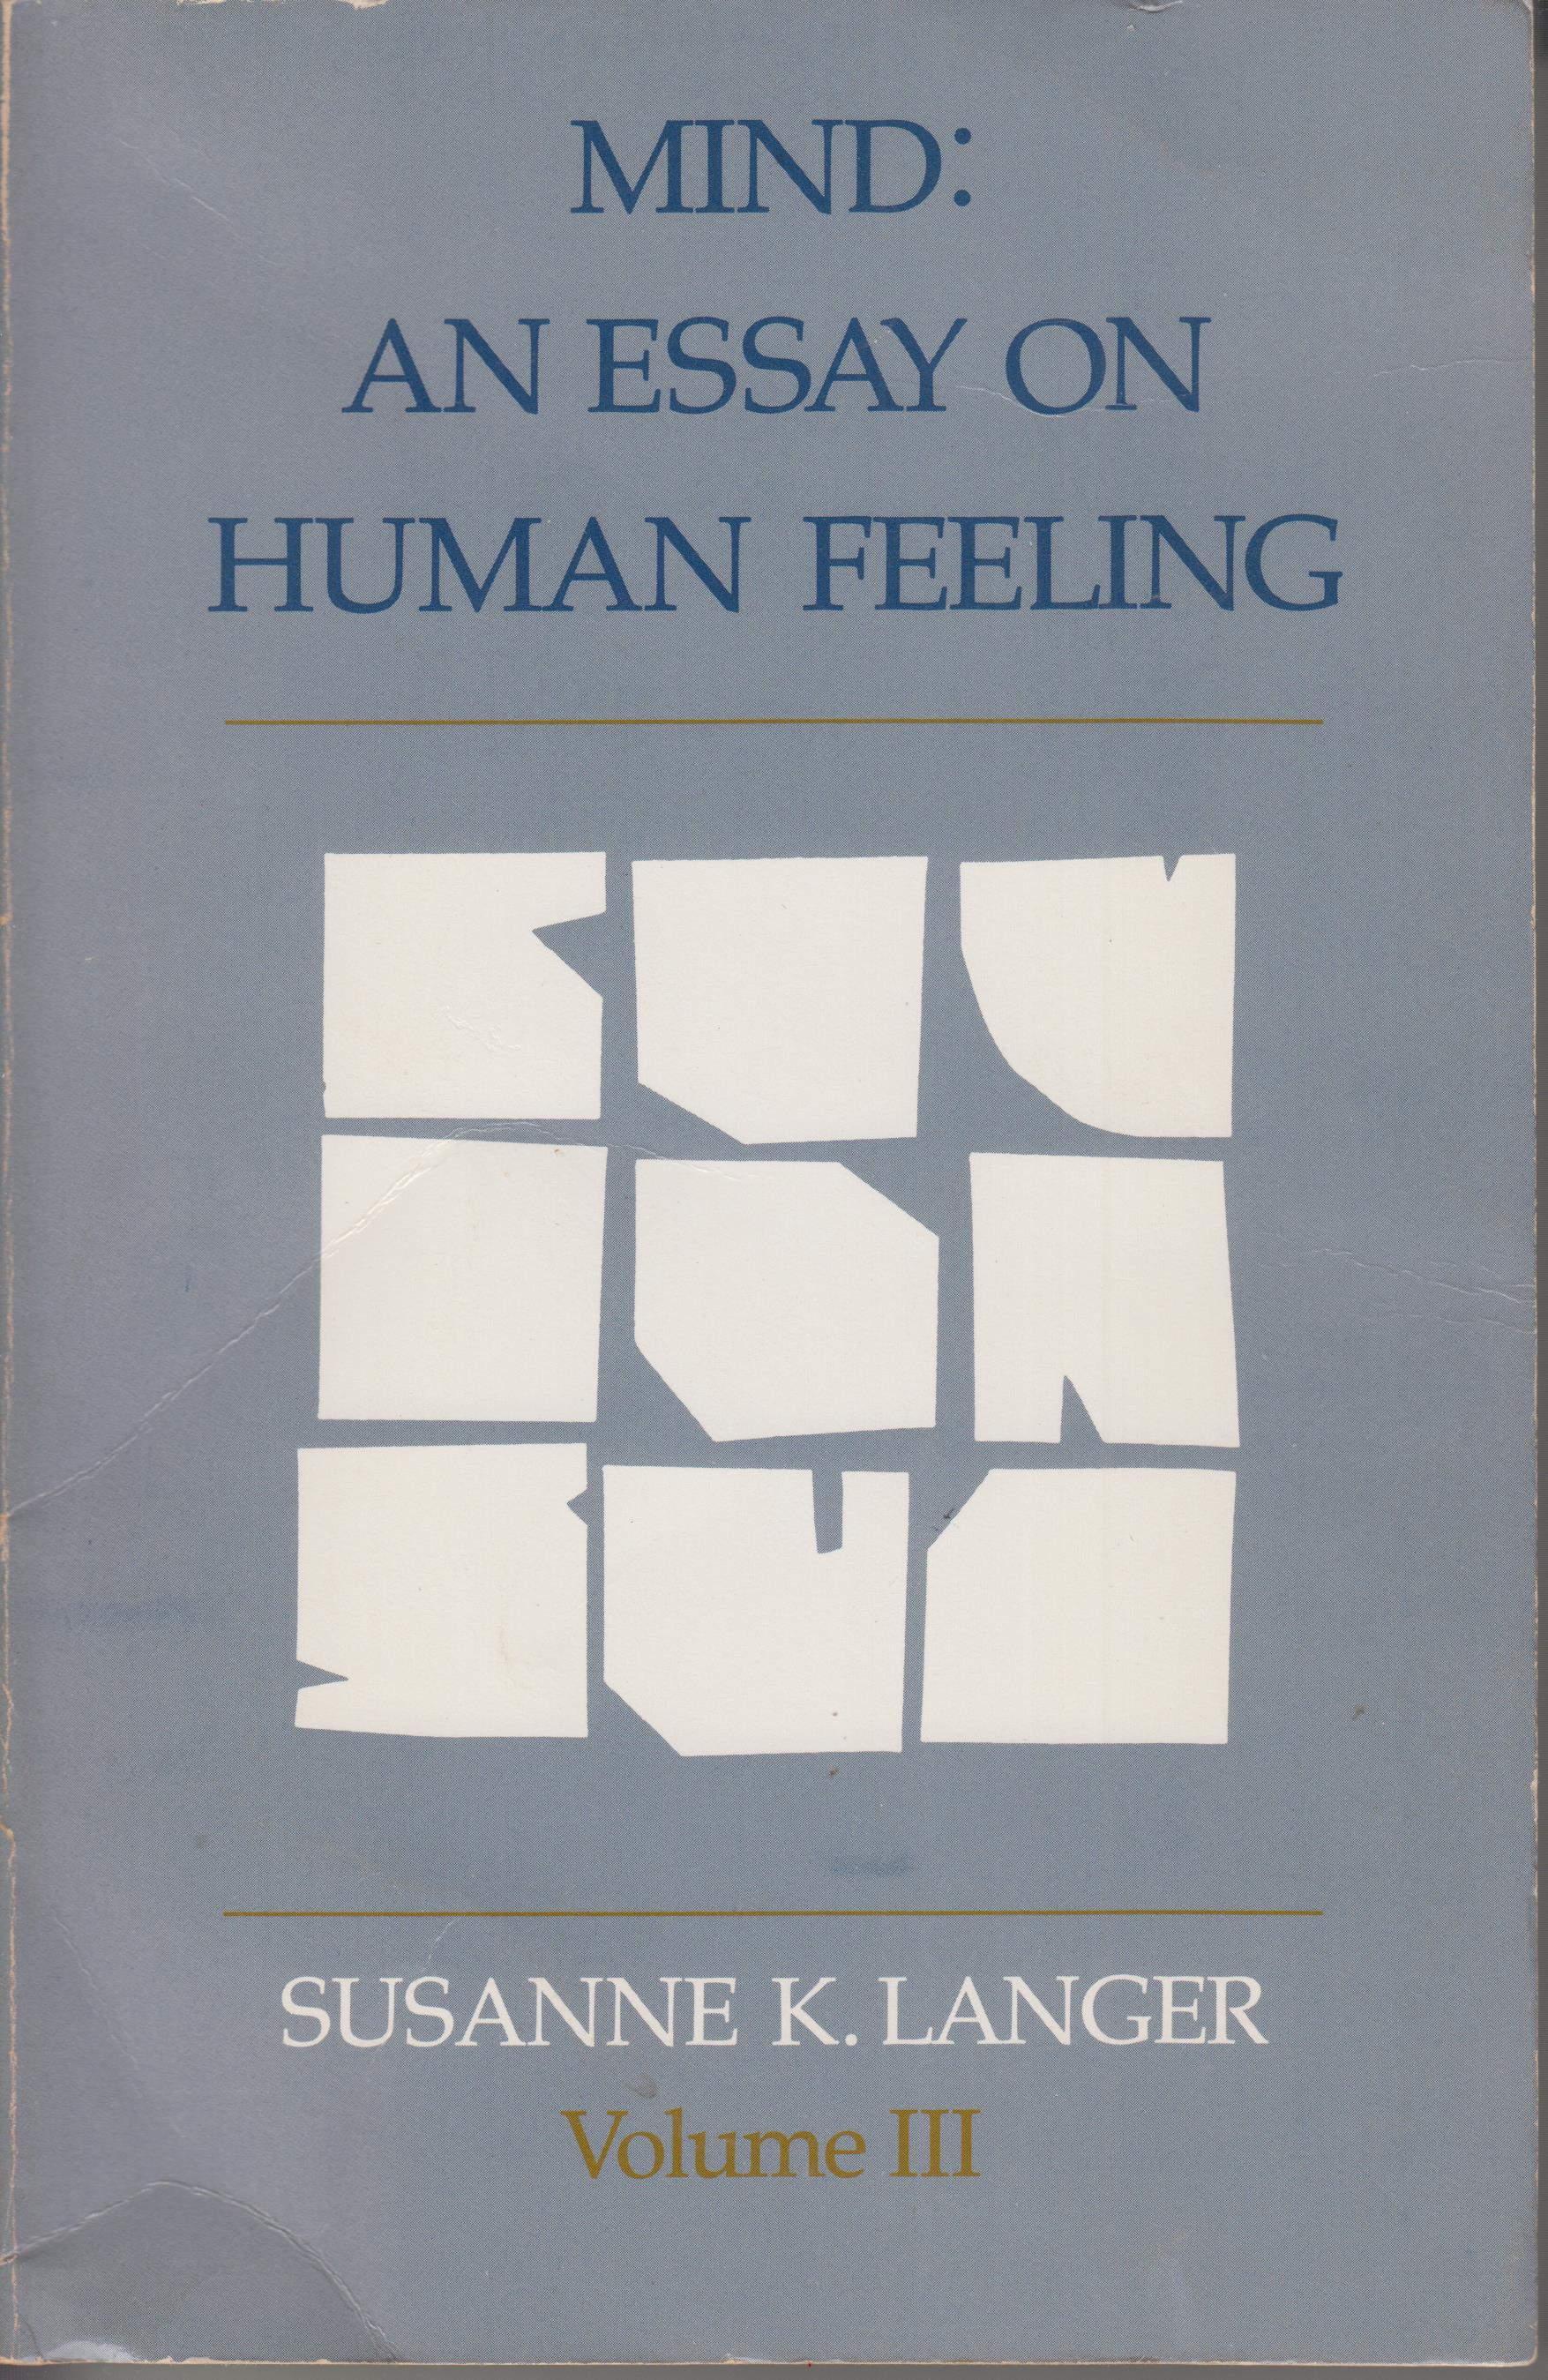 Mind: An Essay on Human Feeling, Volume III - Langer, Susanne K.